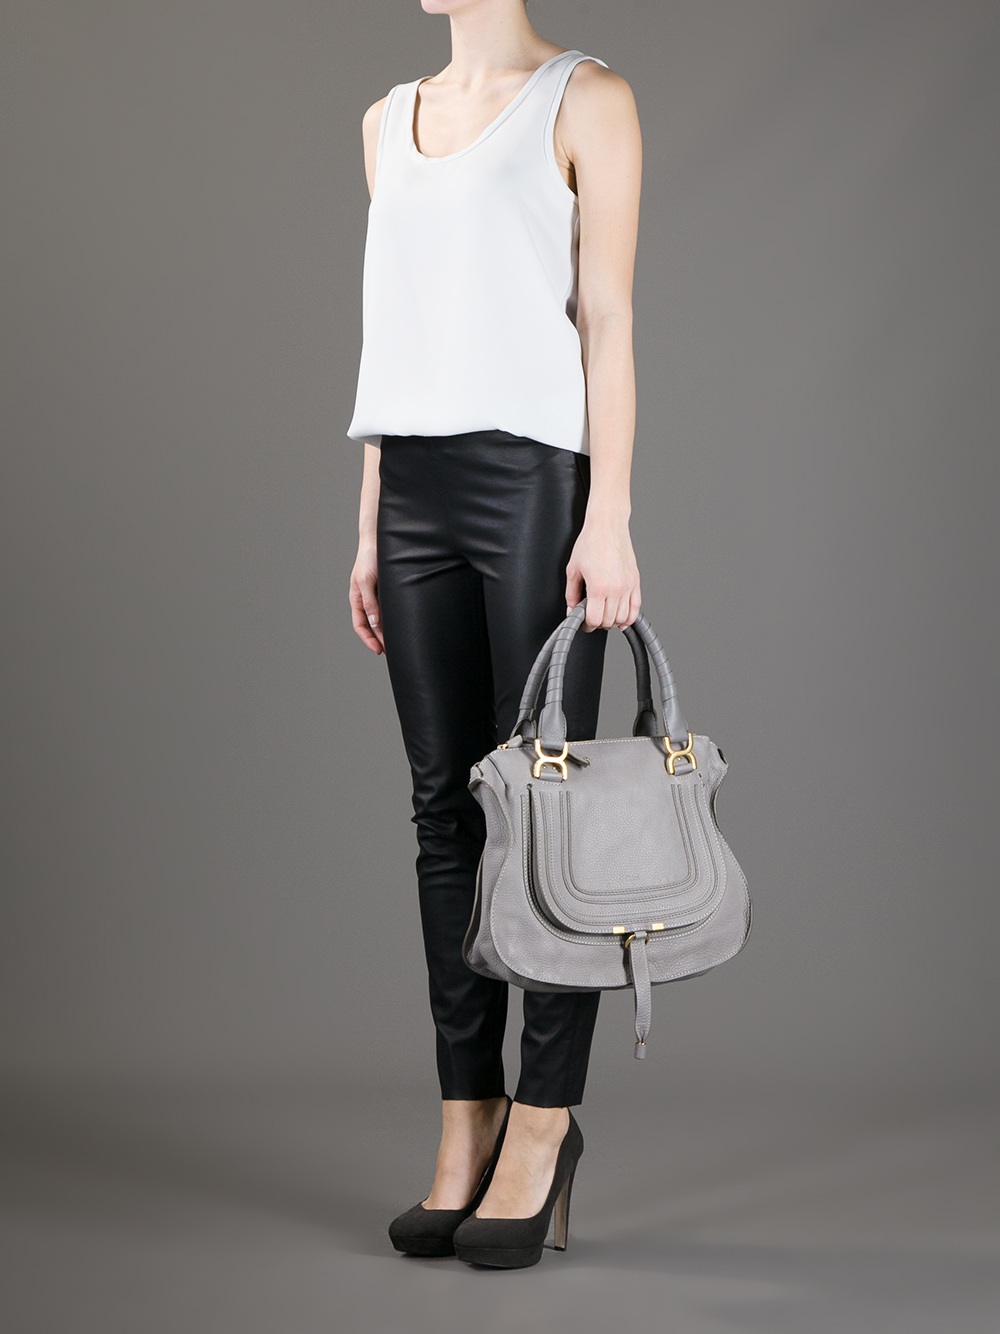 Lyst - Chloé Marcie Tote Bag in Gray